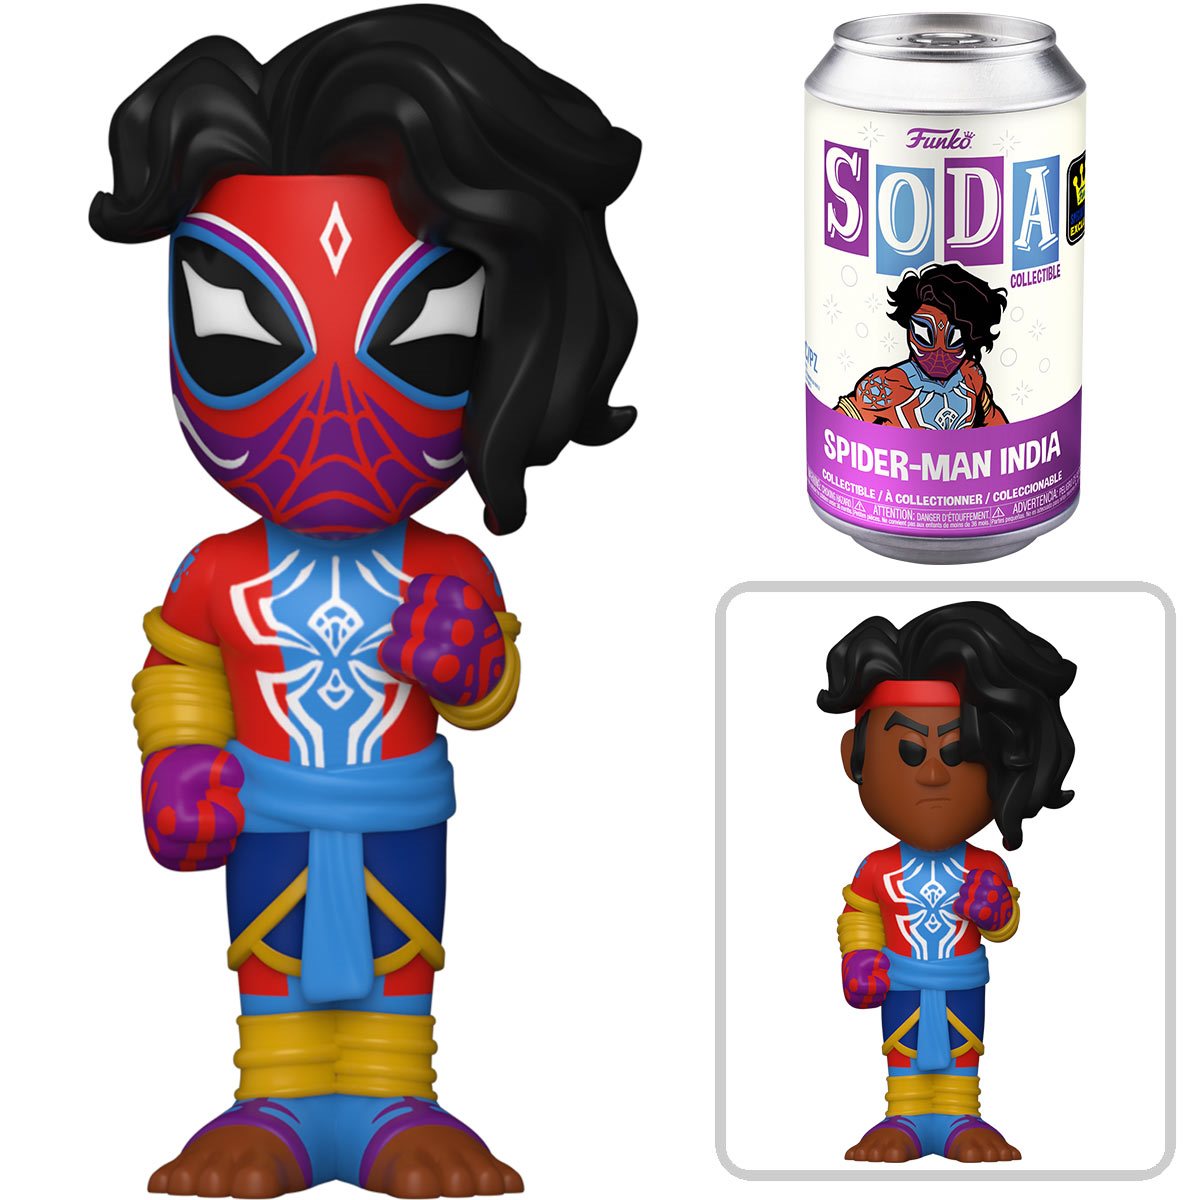 Spider-Man Across The Spider-Verse Spider-Man India Soda Vinyl Figure - Specialty Series